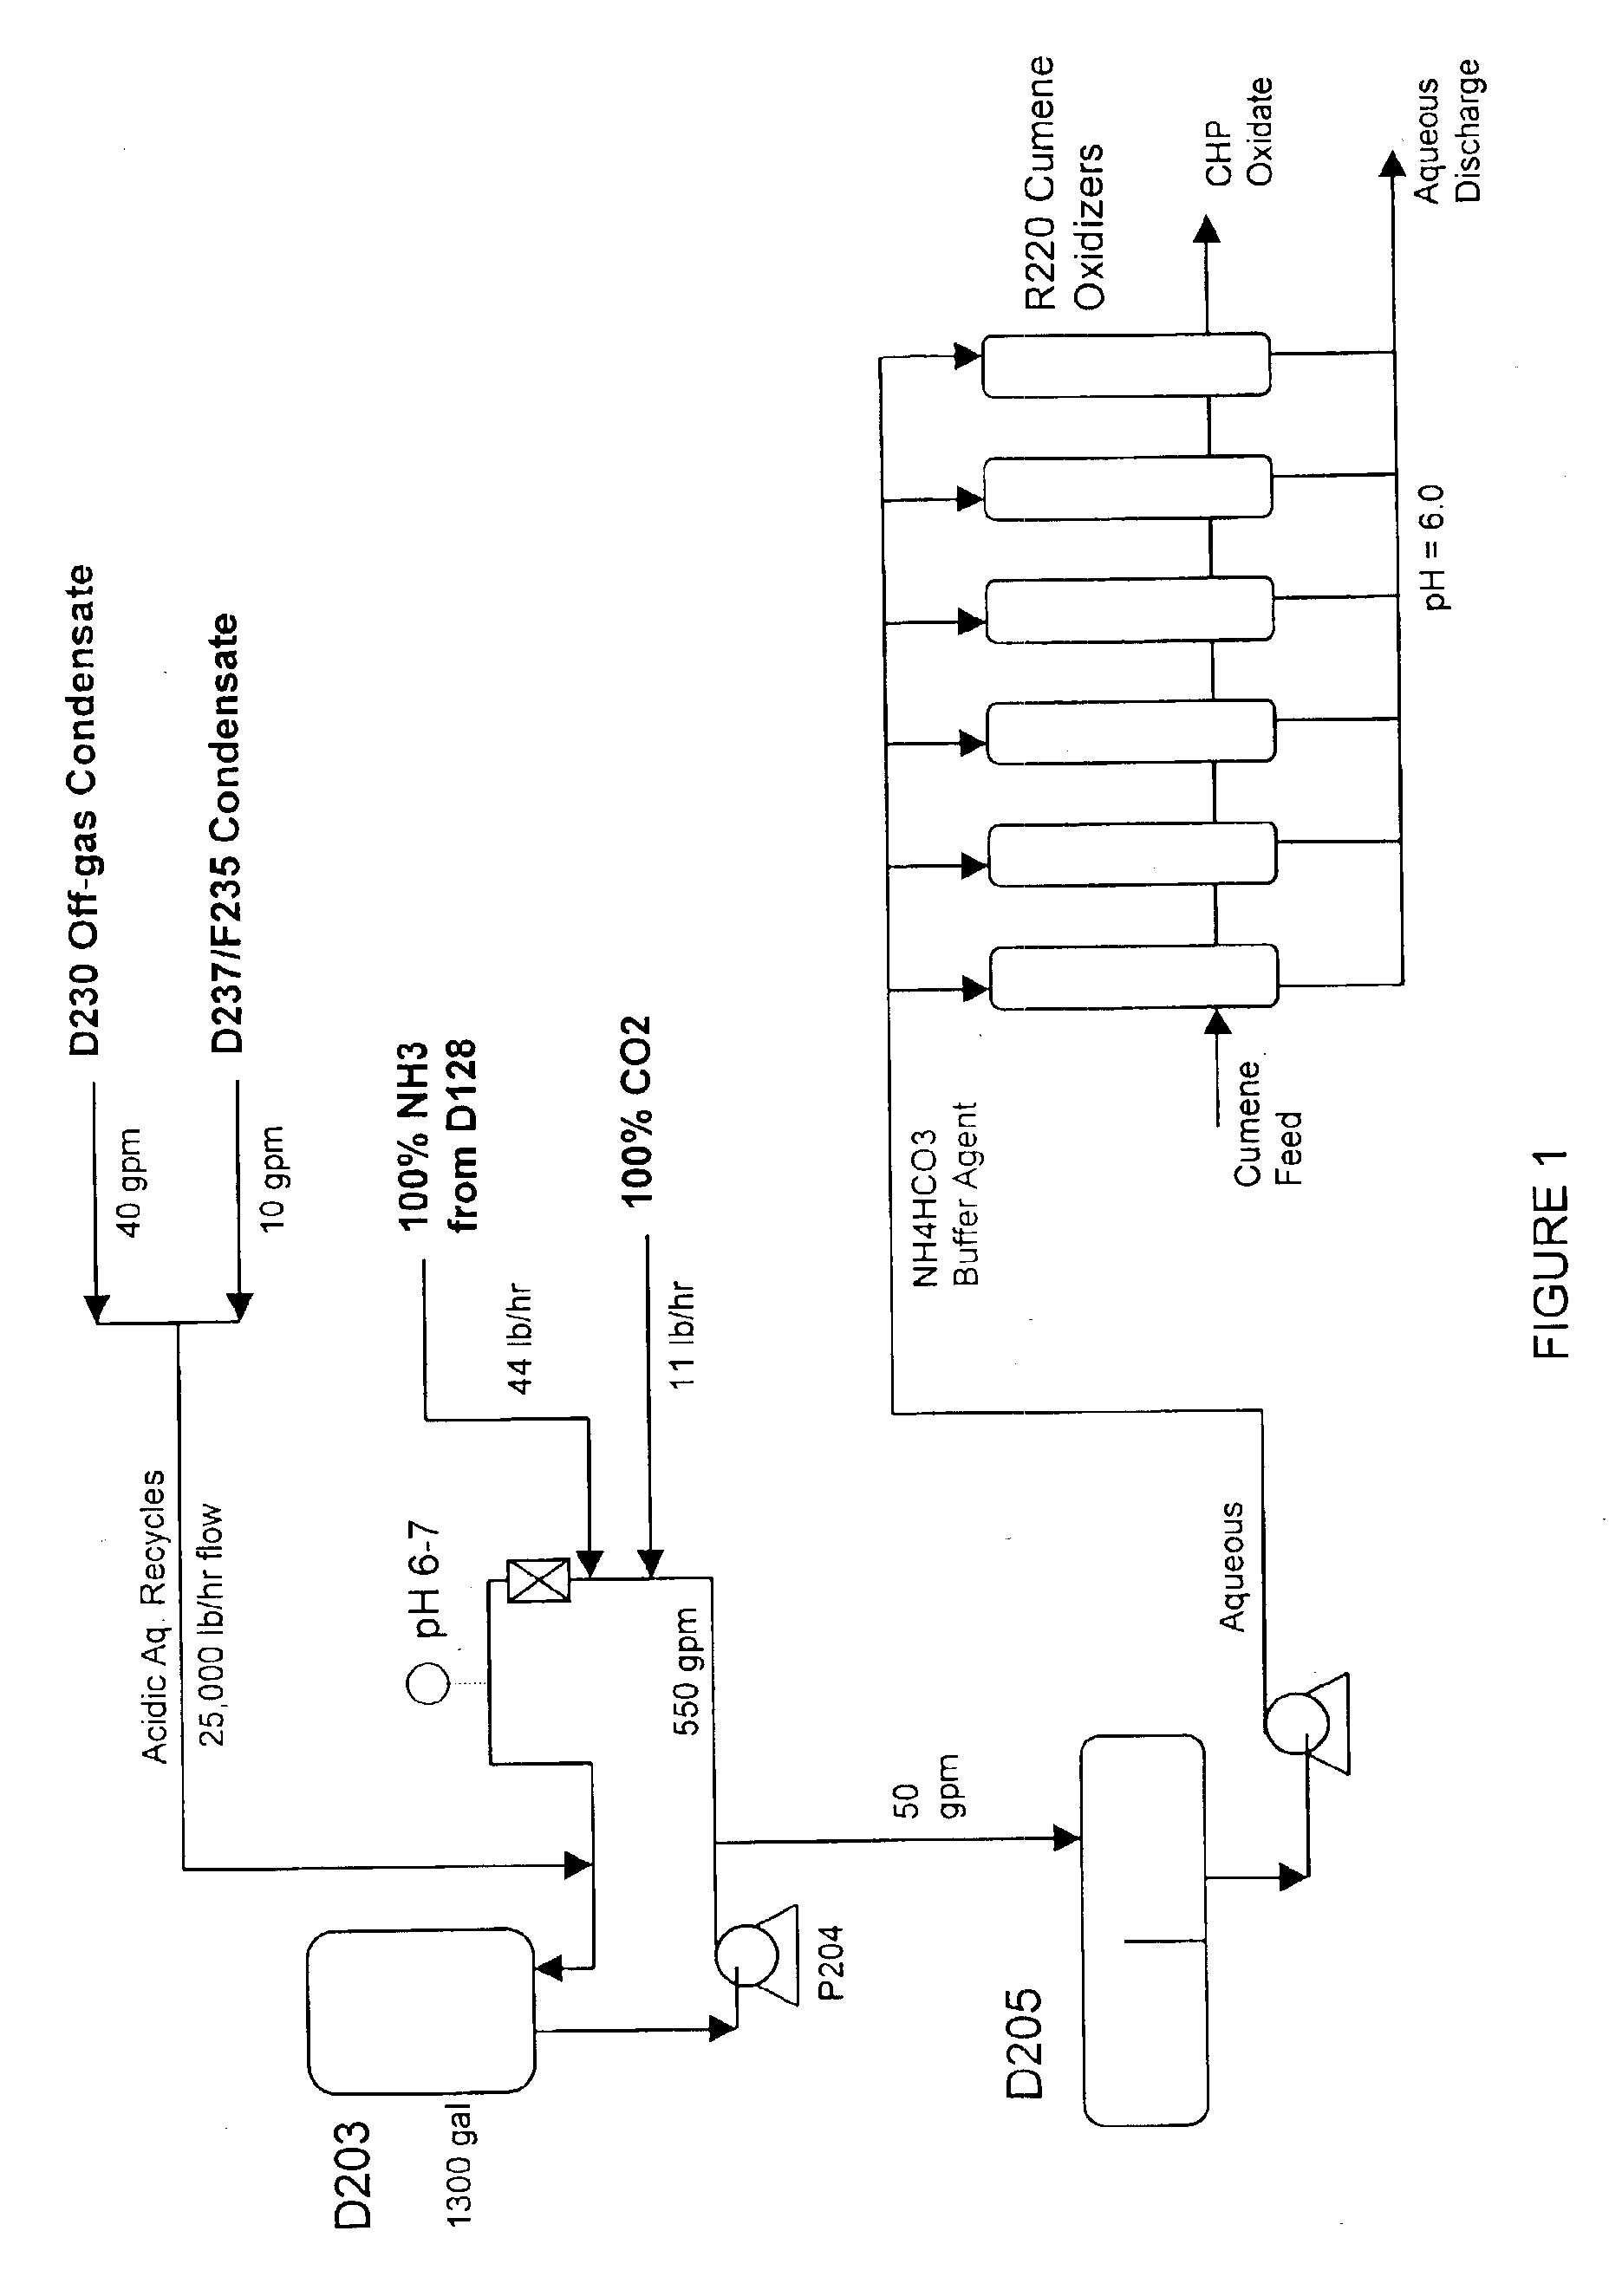 Method of producing cumene hydroperoxide